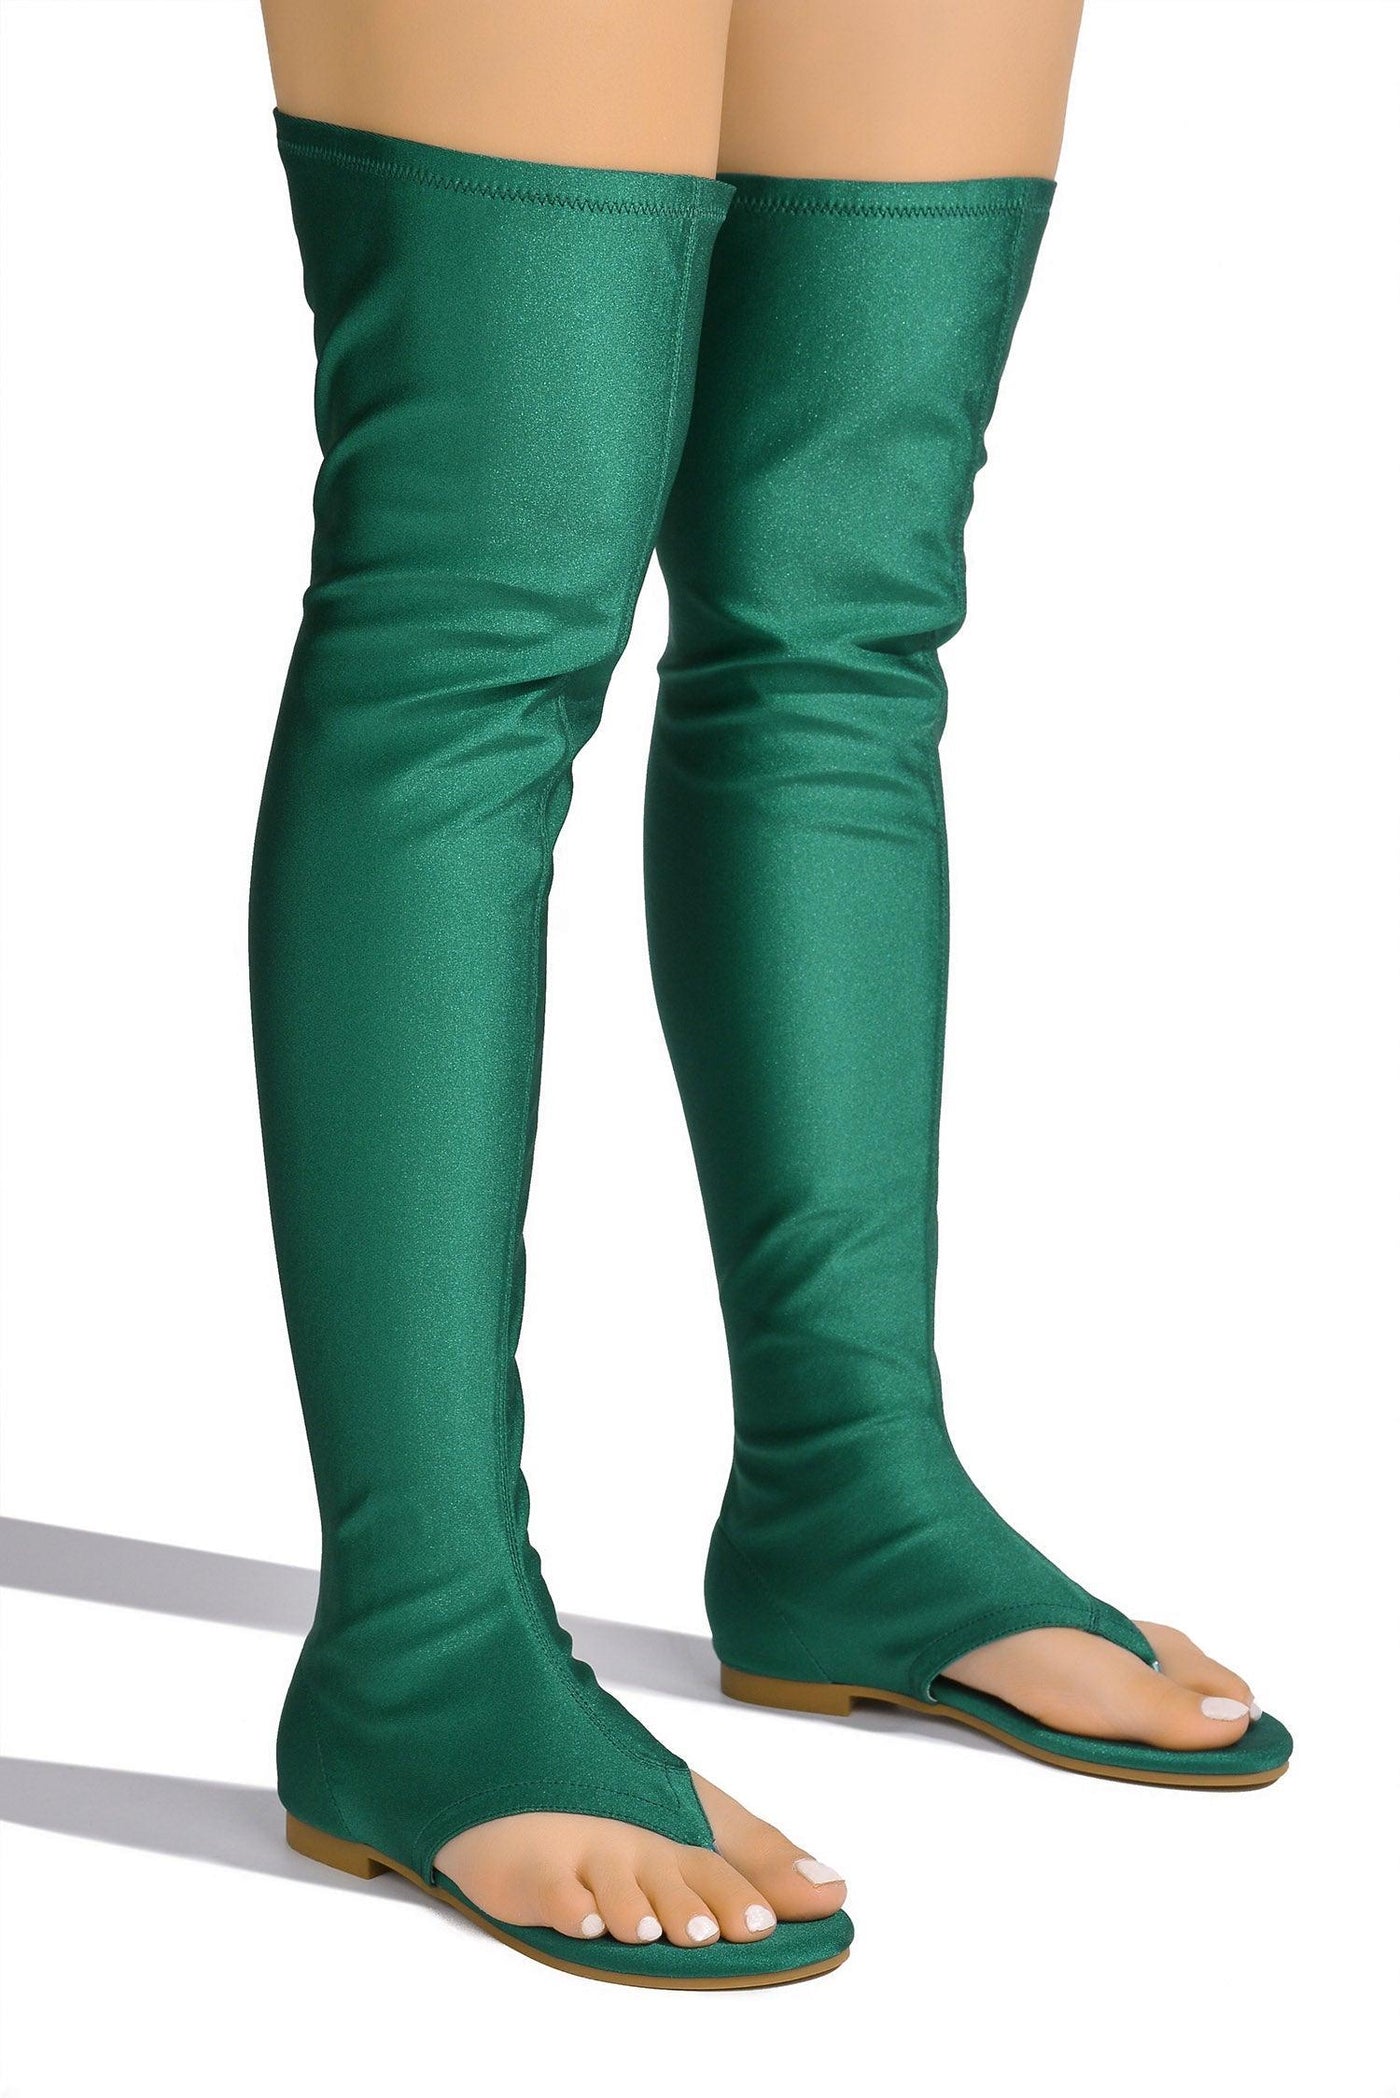 VIJAYA - GREEN - AMIClubwear